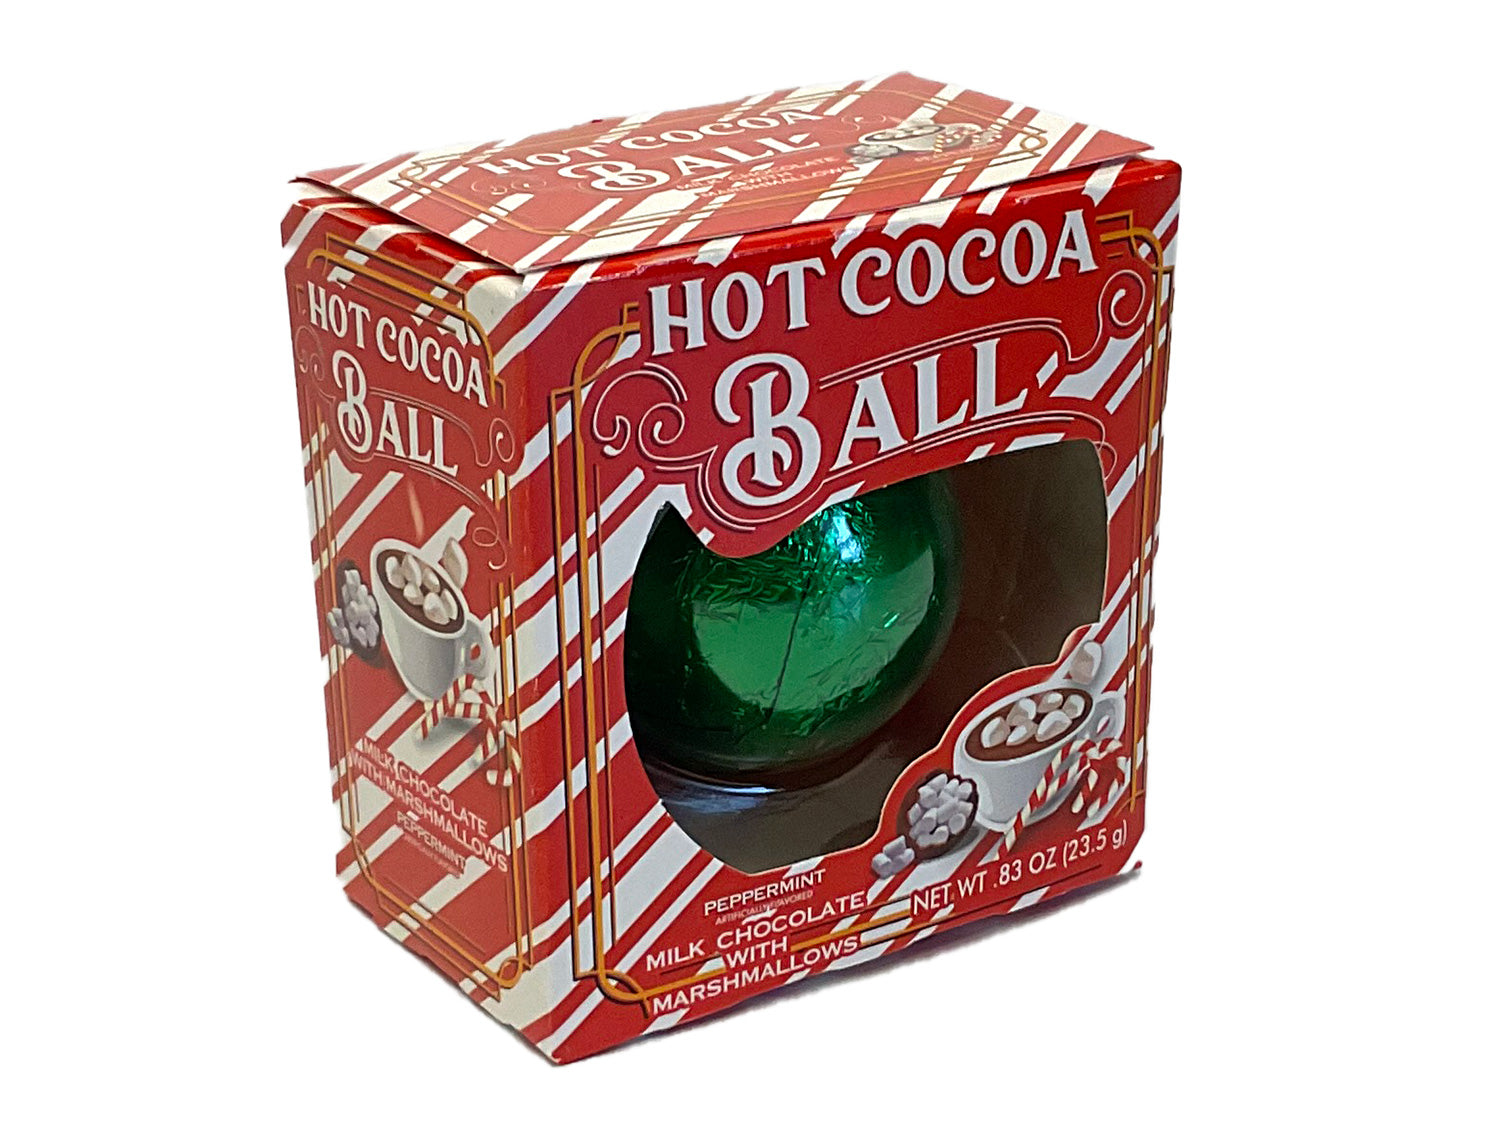 Hot Cocoa Ball - Peppermint - 0.83 oz